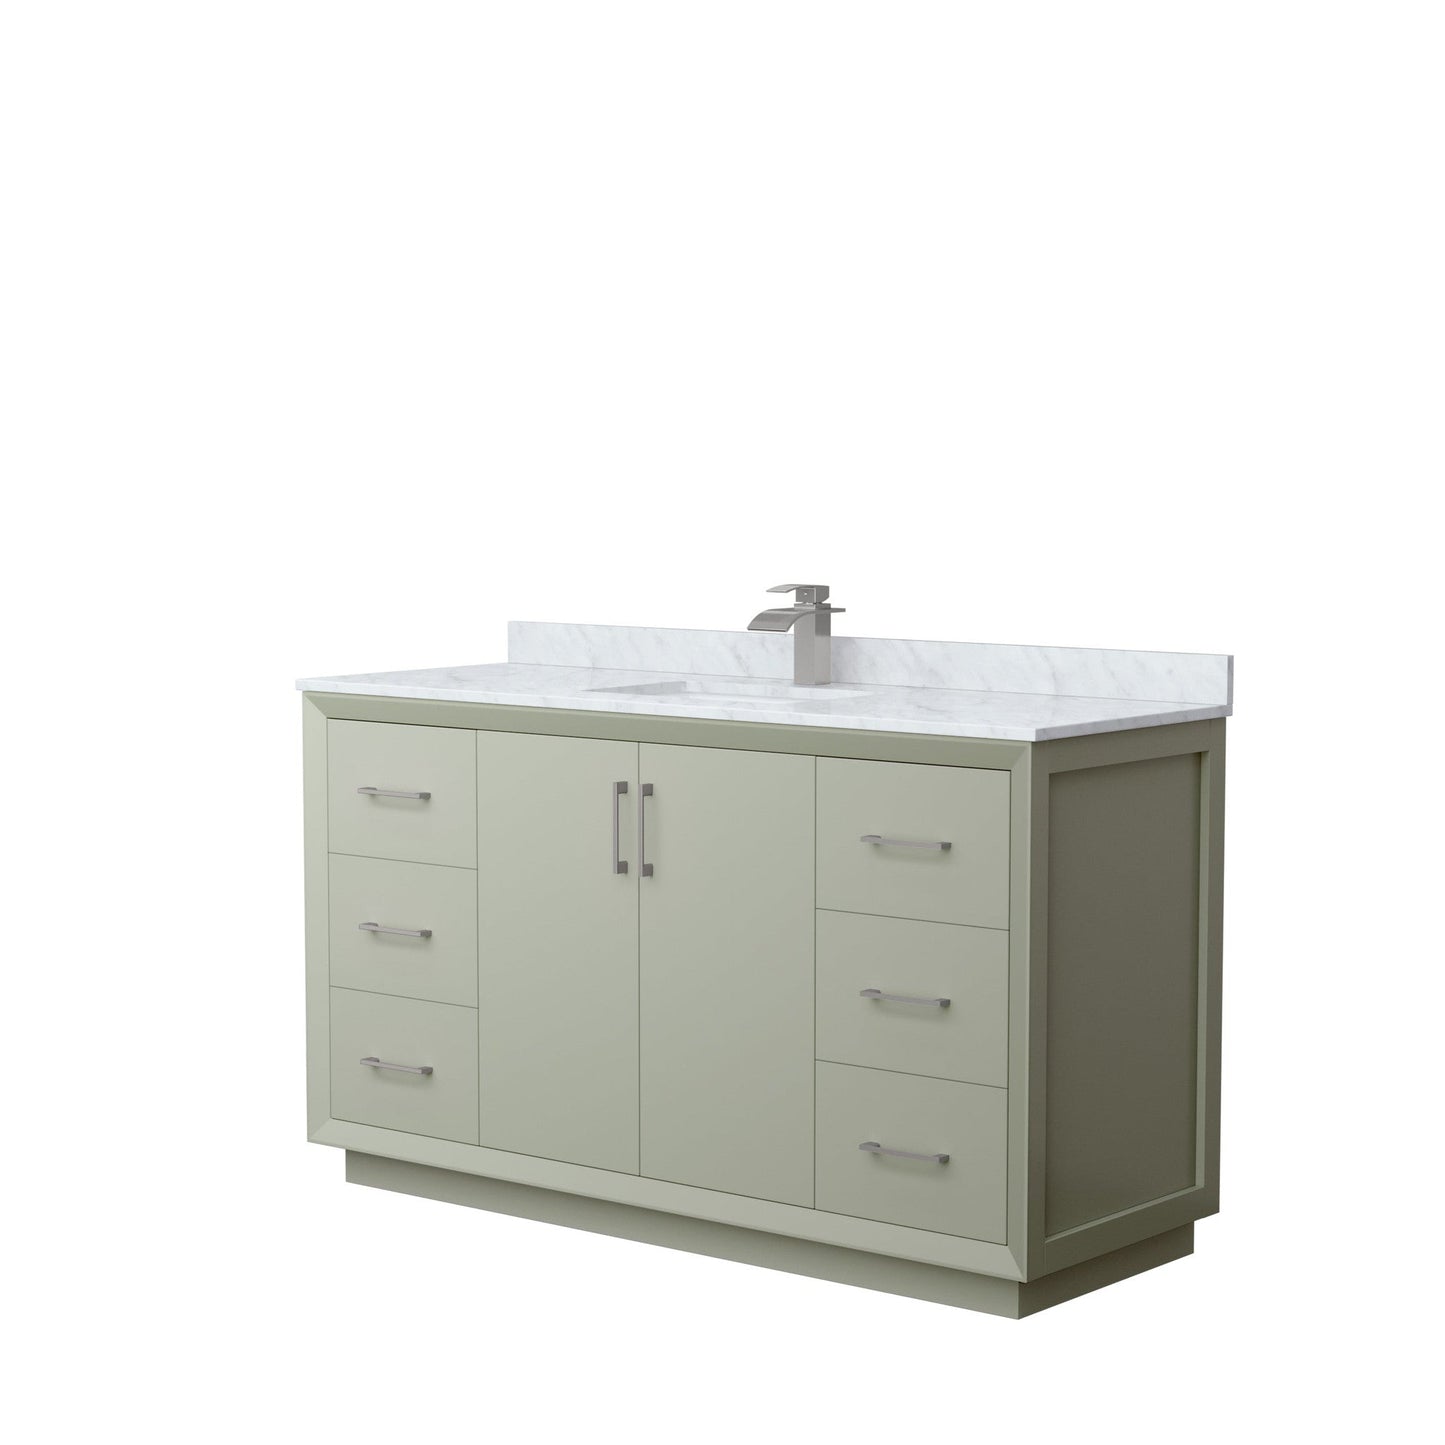 Wyndham Collection Strada 60" Single Bathroom Vanity in Light Green, White Carrara Marble Countertop, Undermount Square Sink, Brushed Nickel Trim